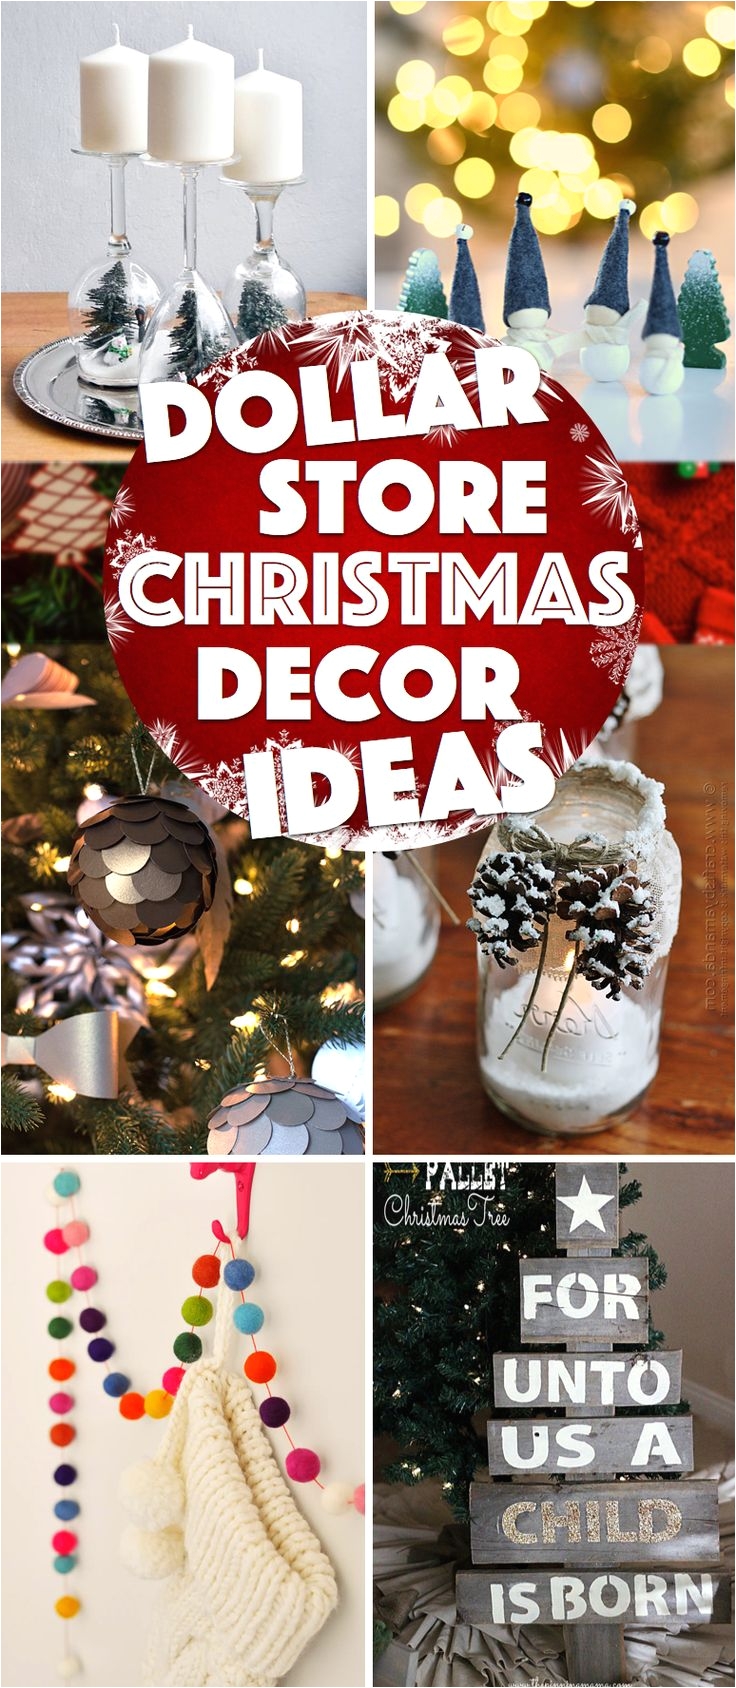 Dollar General Christmas Decorations 2017 Sweet Dollar Store Christmas Tree Best 25 Ideas On Pinterest Diy